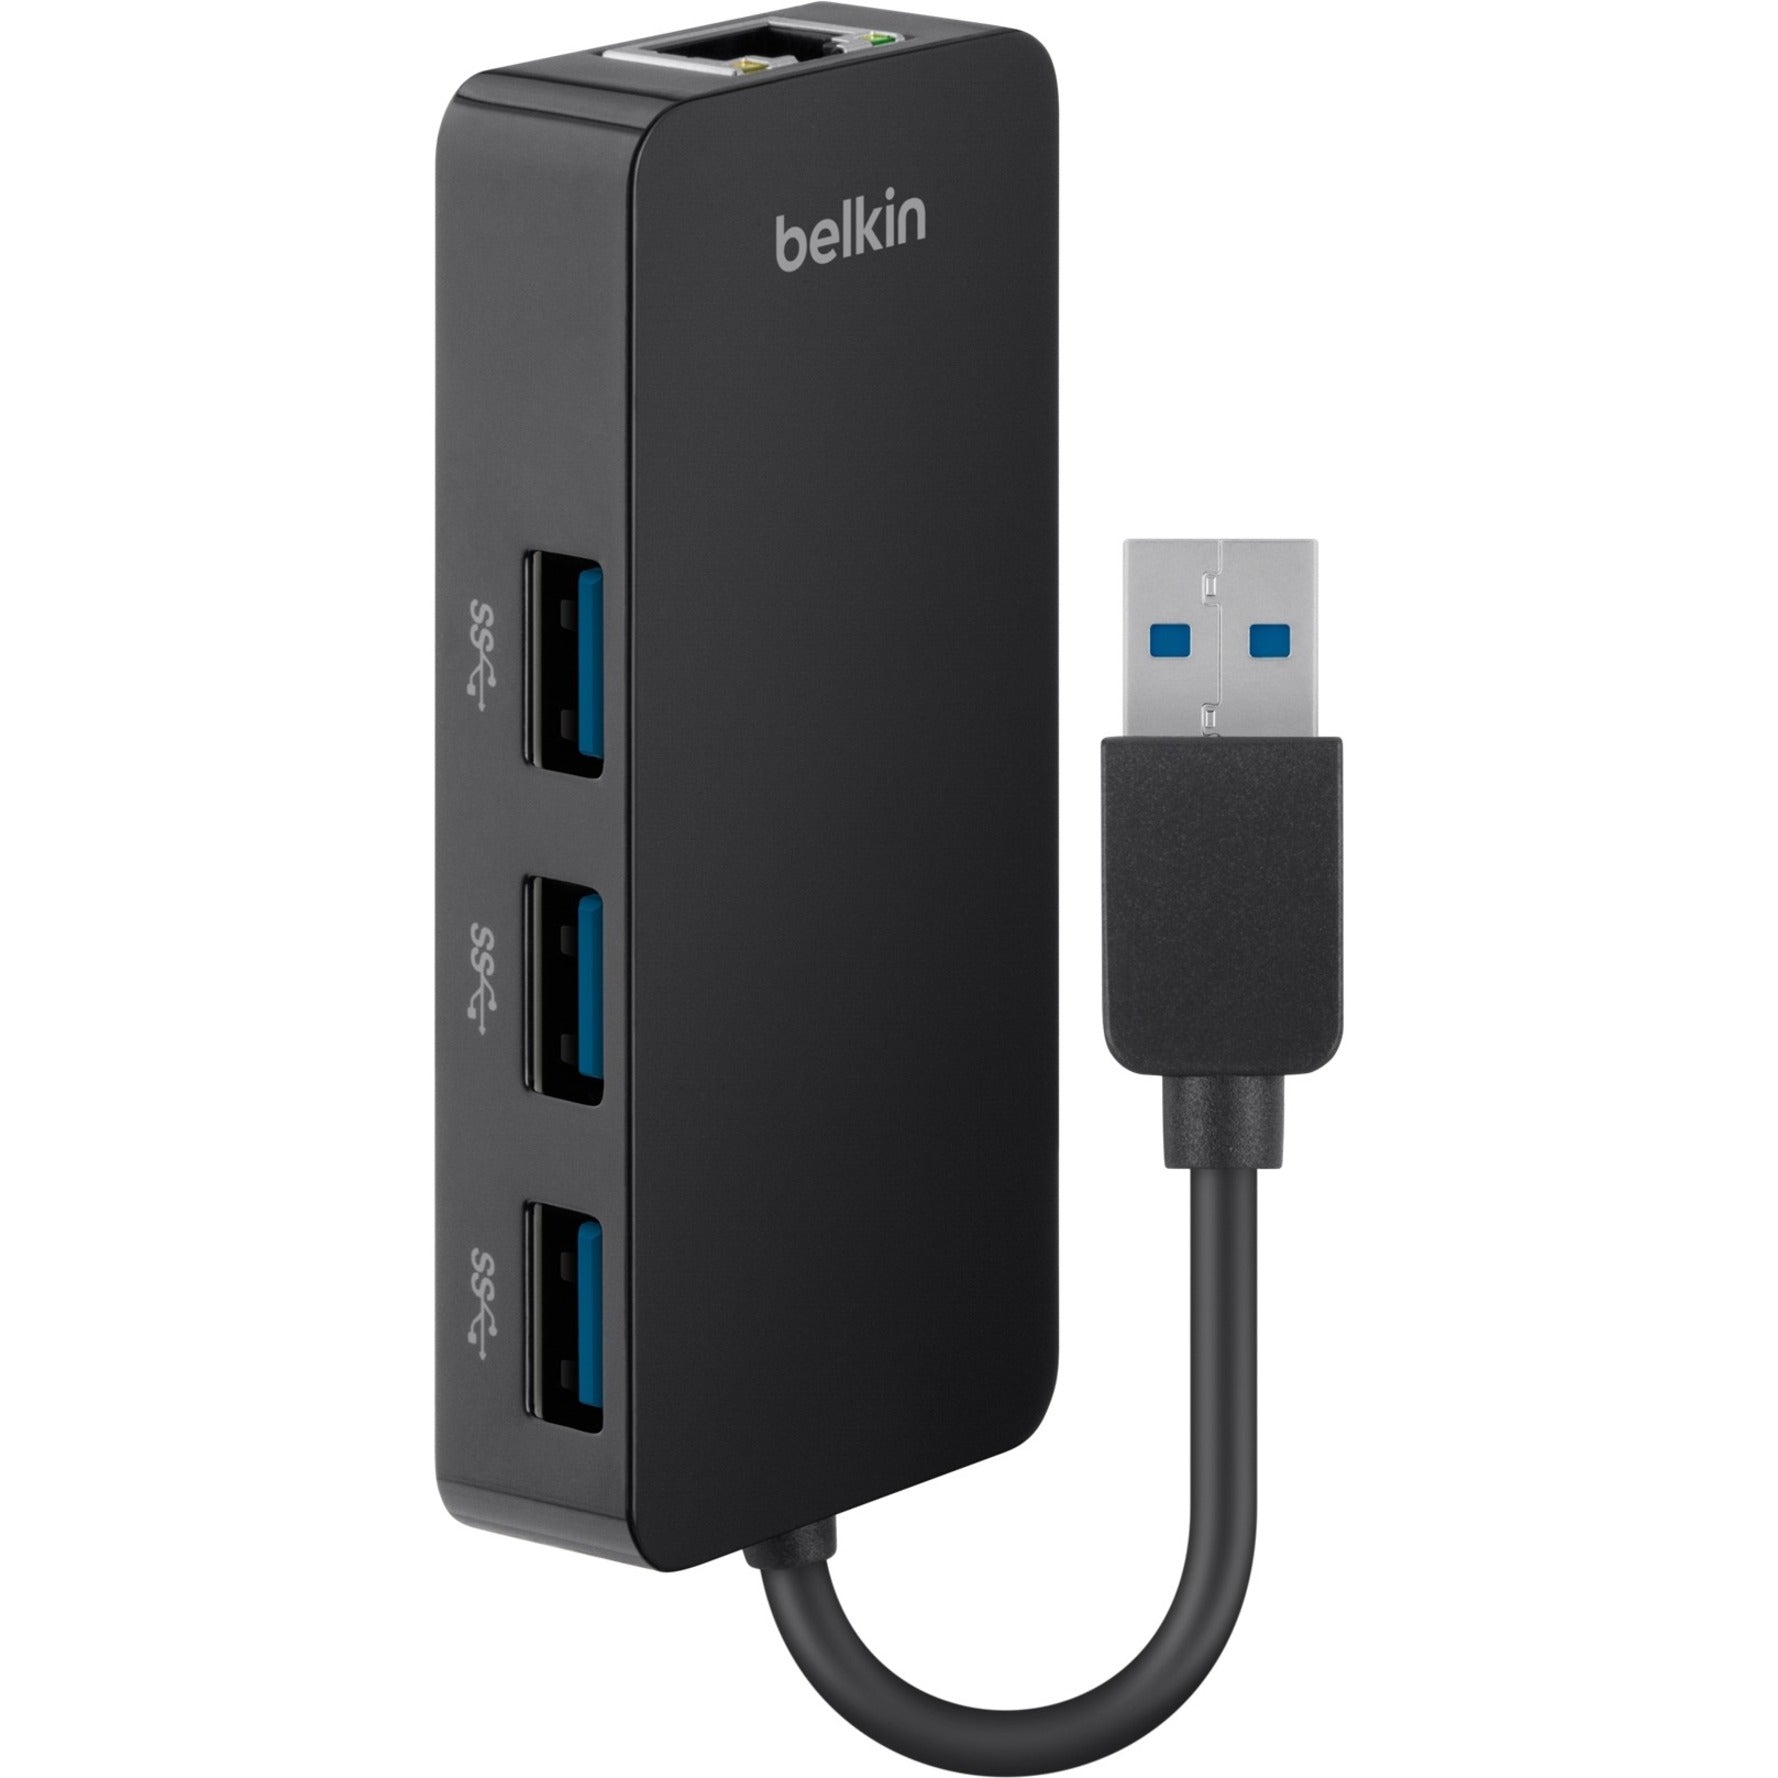 Belkin USB 3.0 3-Port Hub with Gigabit Ethernet Adapter [Discontinued]